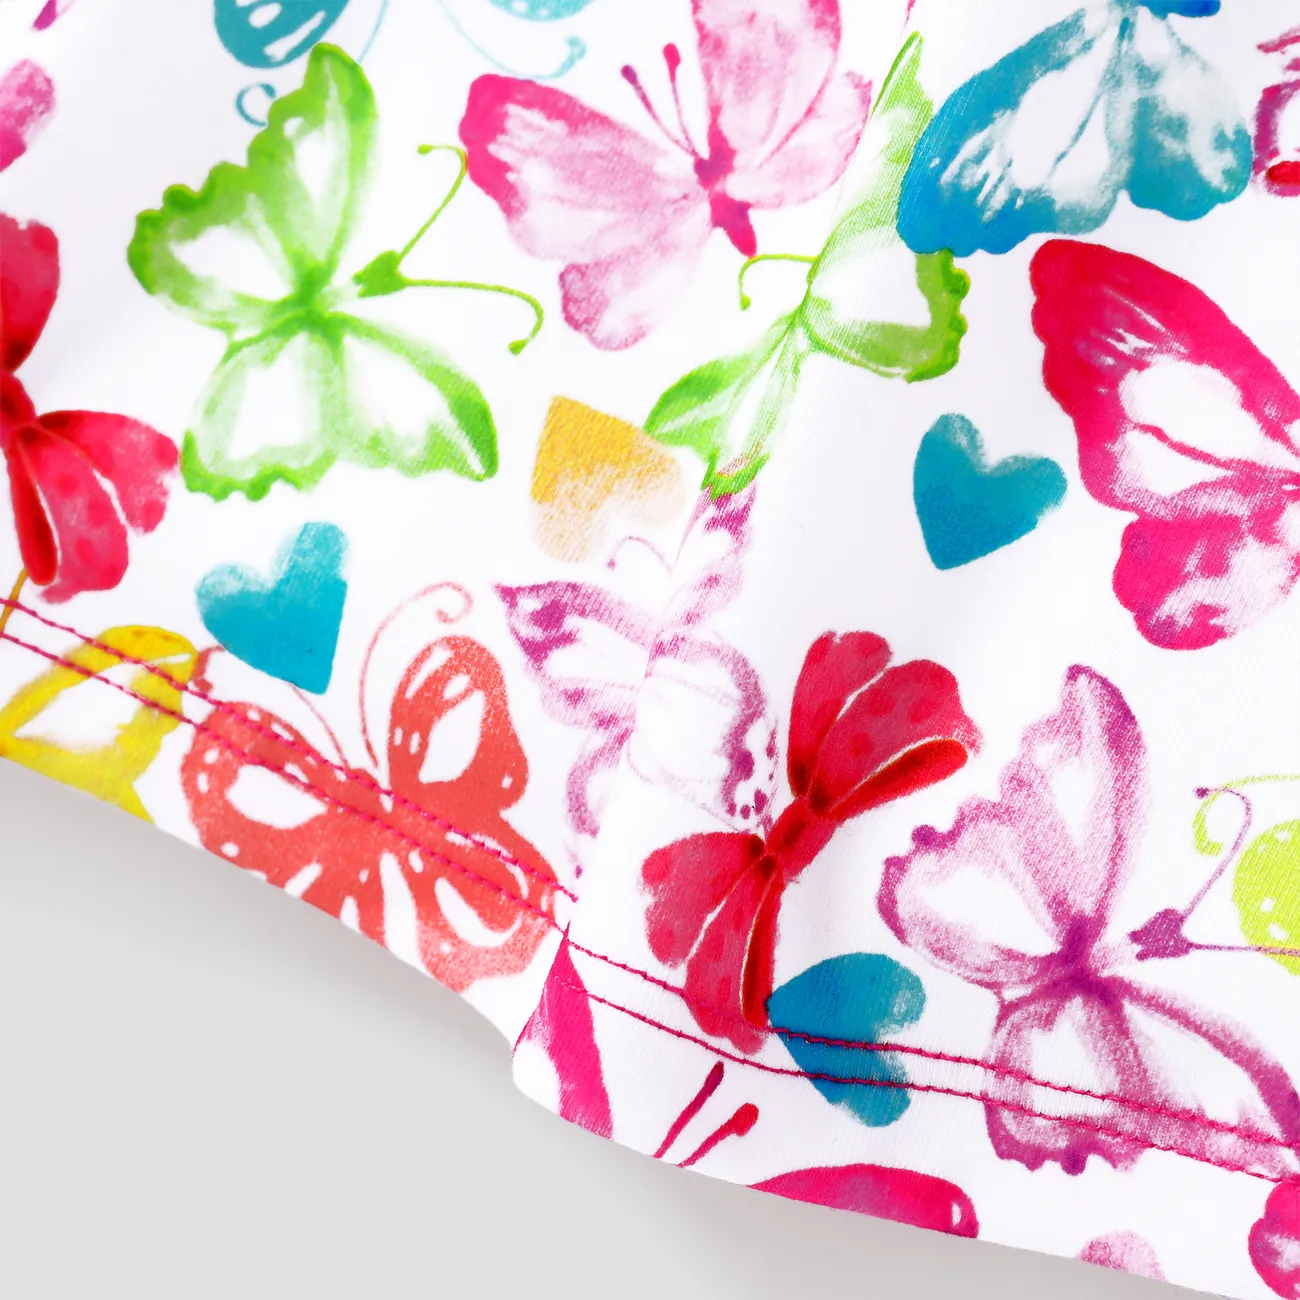 Sweet Butterfly Hanging Strap Sleeveless Baby Girl Dress, 1pcs, Polyester, Animal Pattern Pink big image 1